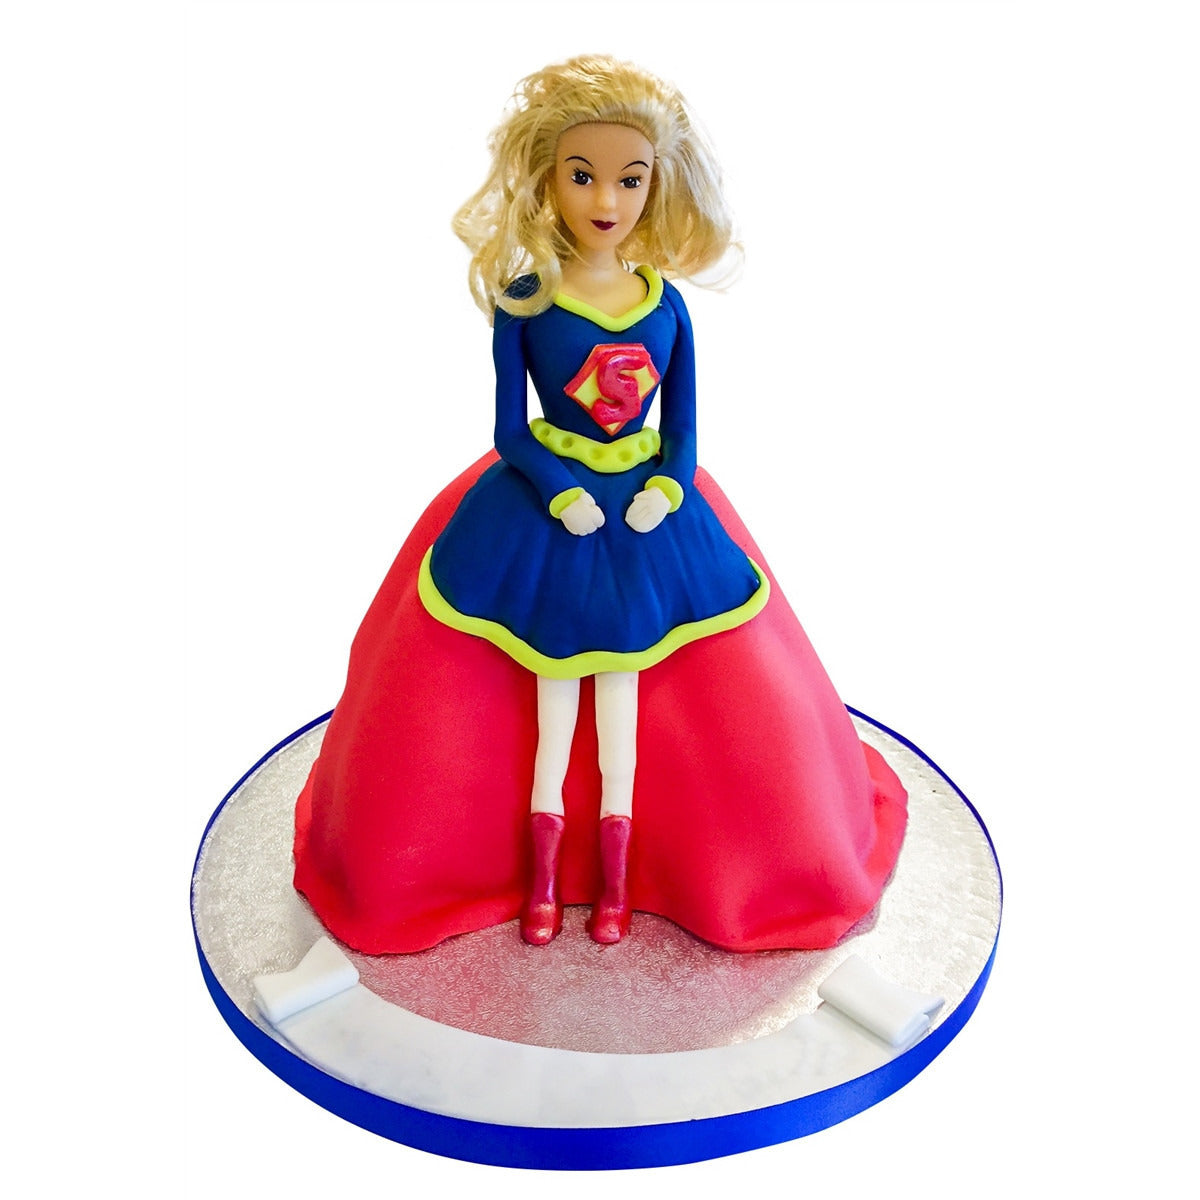 Share 163+ supergirl cake decorations best